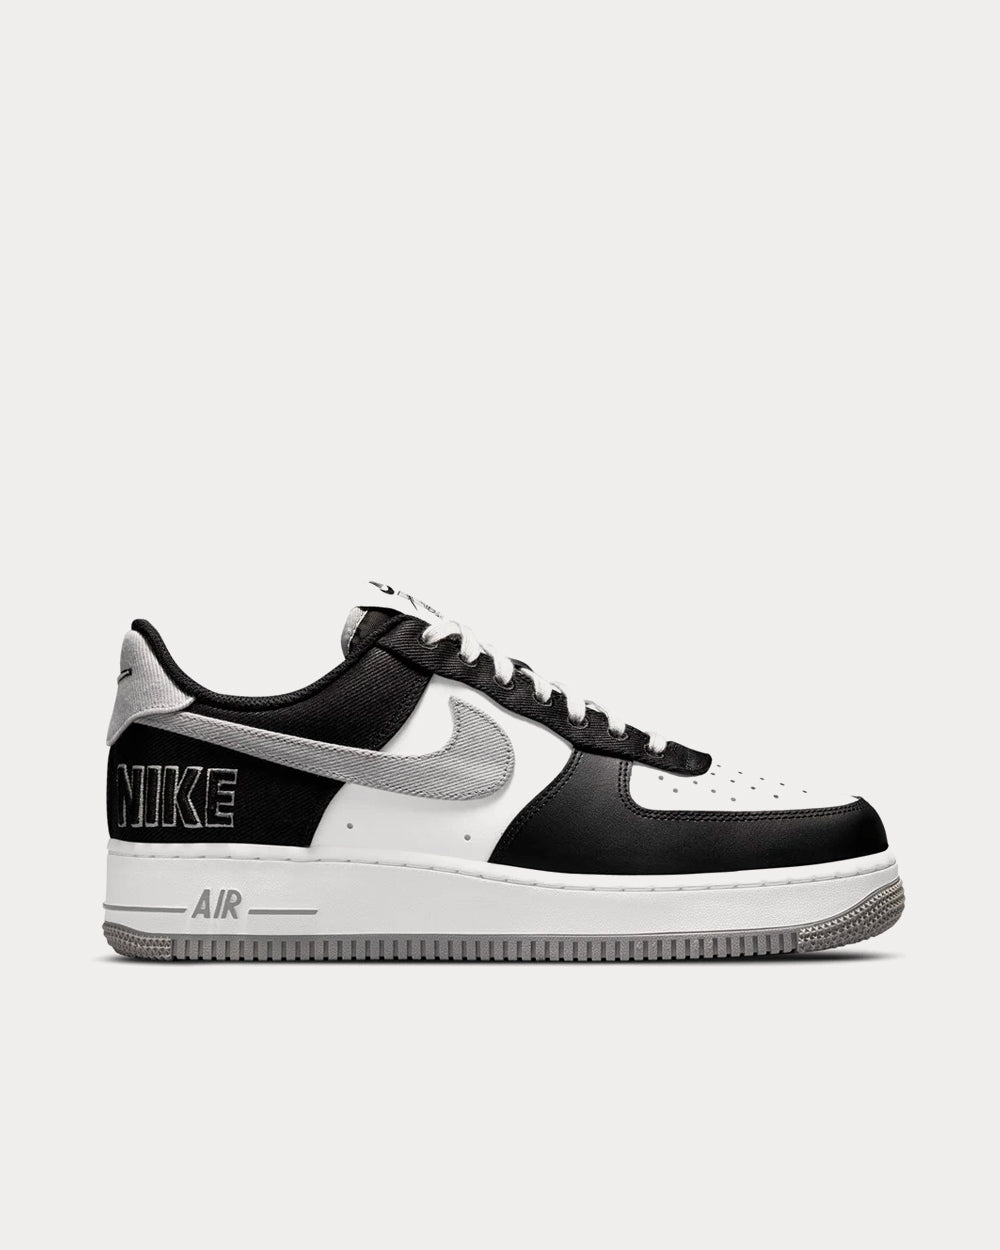  Nike mens Air Force 1 '07 Lv8 Emb, Black/Black-iron Grey-white,  13 : Everything Else